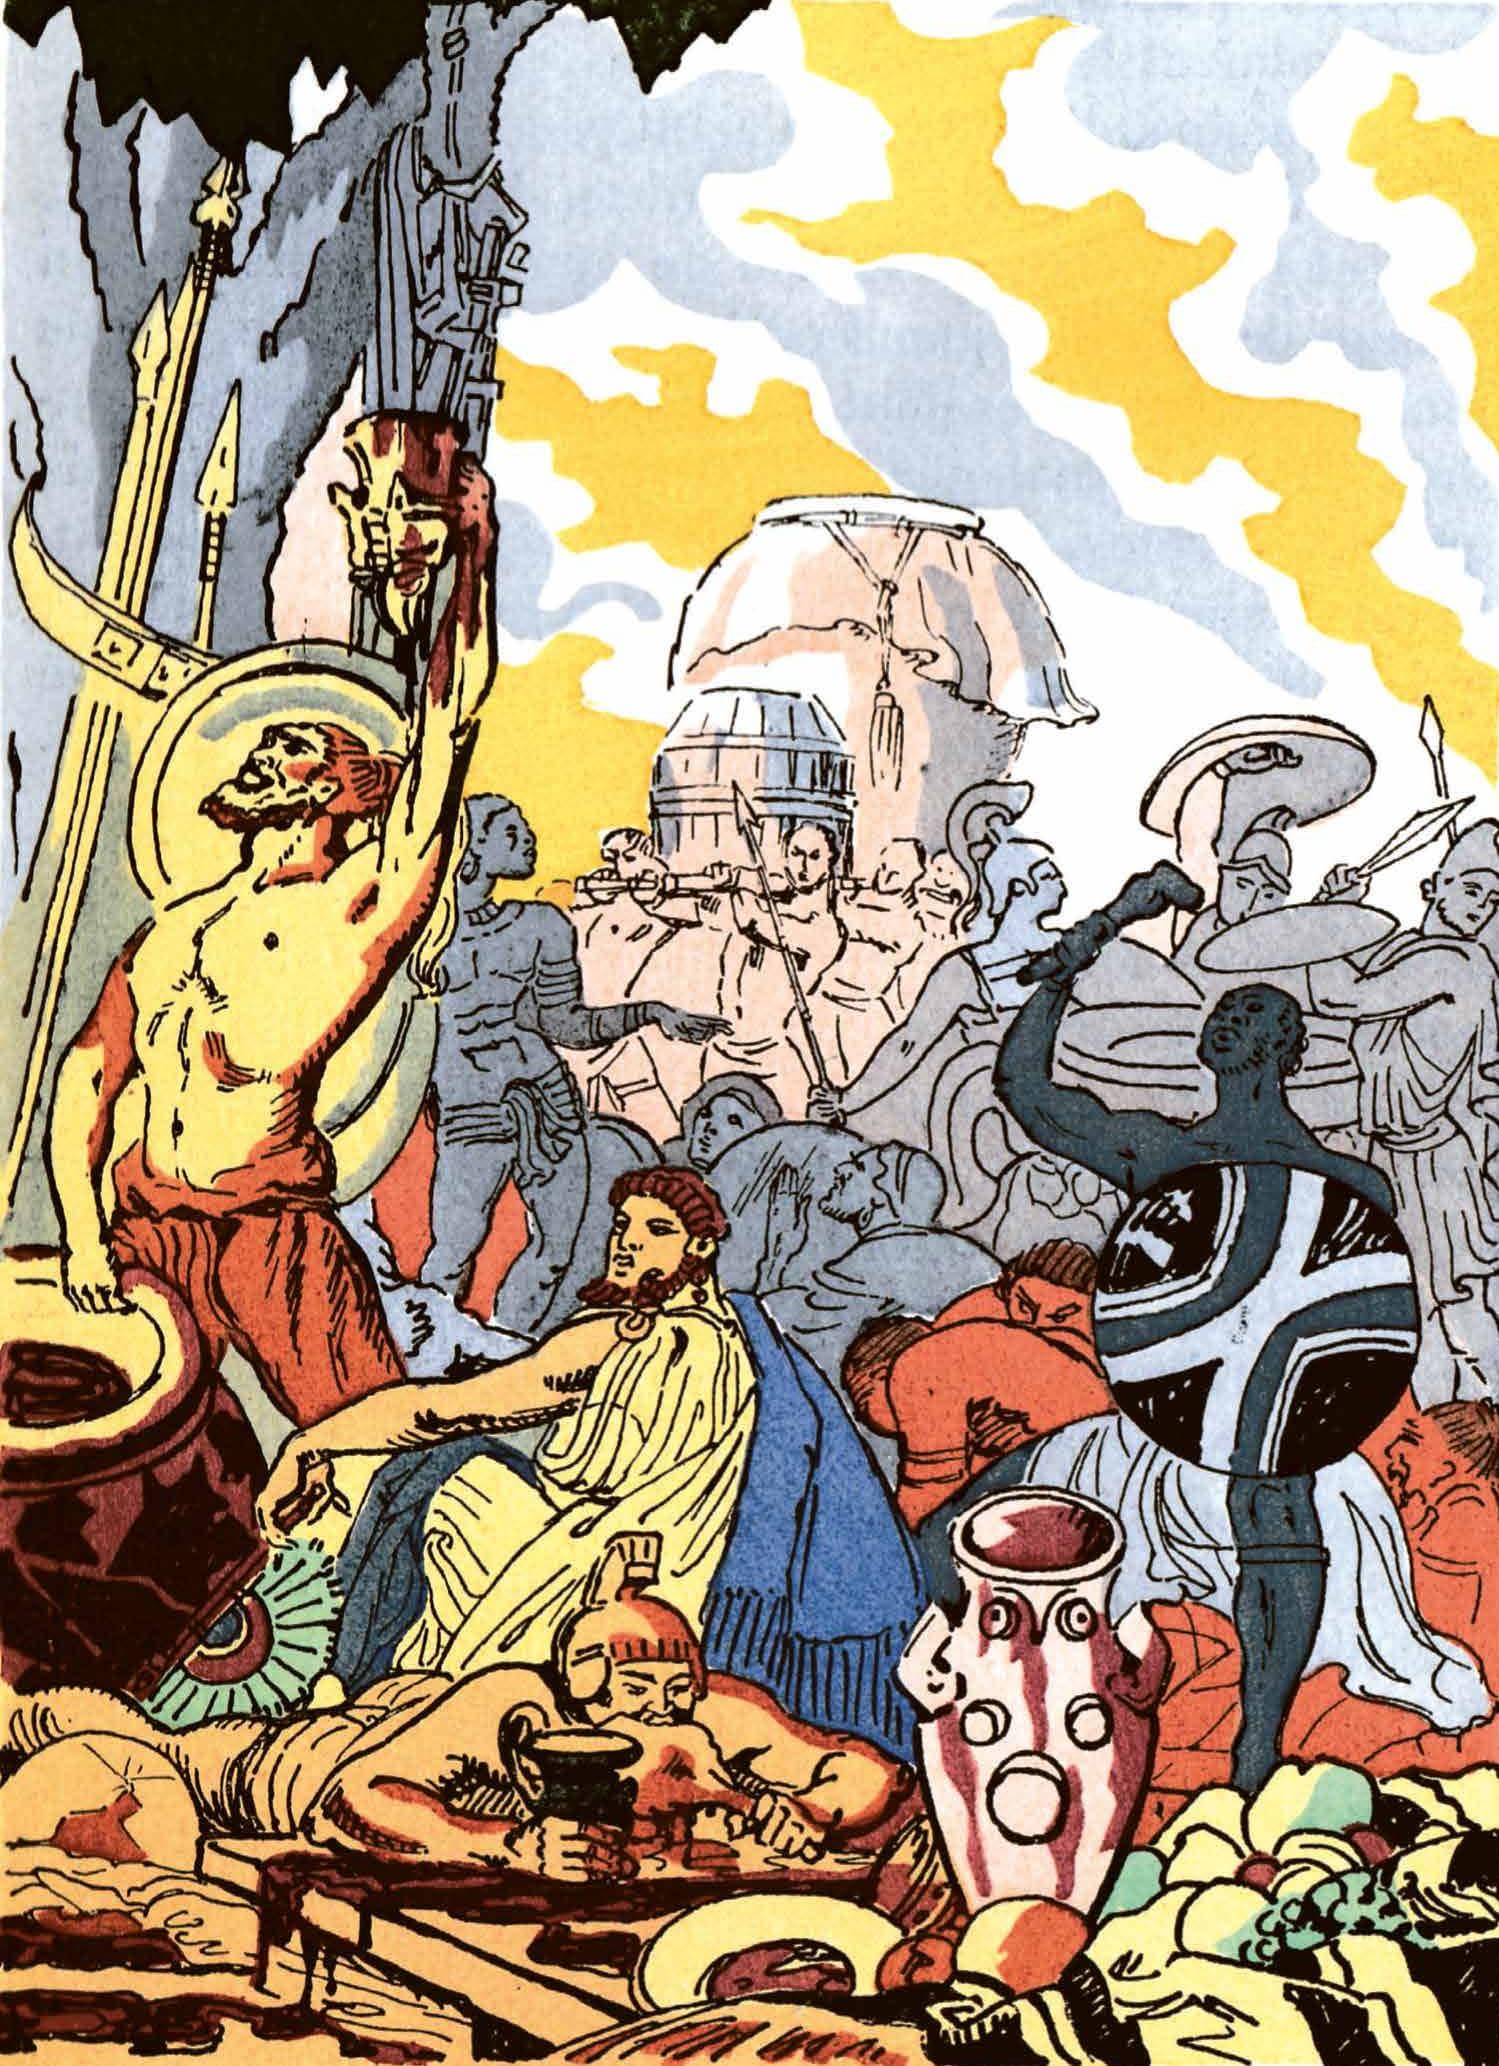 "Salambò" di Gustave Flaubert, illustrazioni di Suzanne-Raphaële Lagneau (L'Ippocampo)